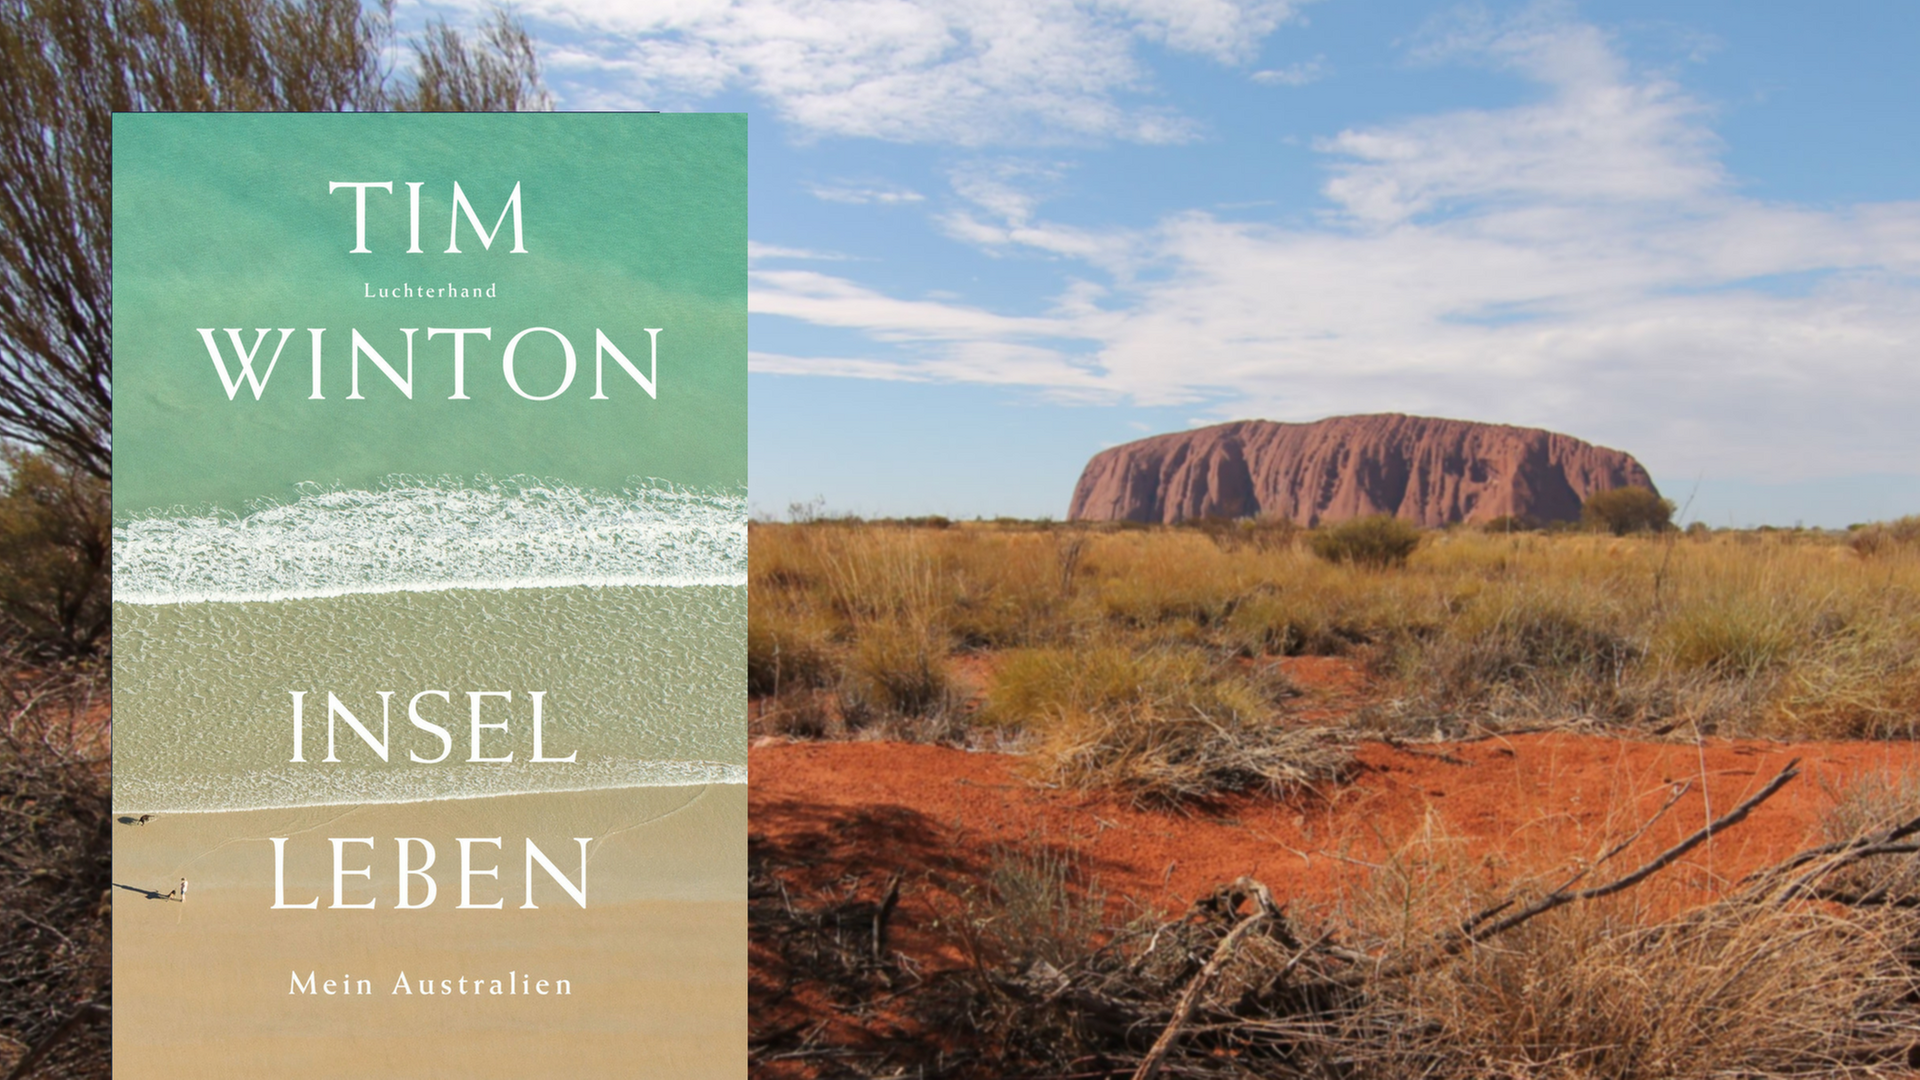 Tim Winton: "Inselleben – Mein Australien"